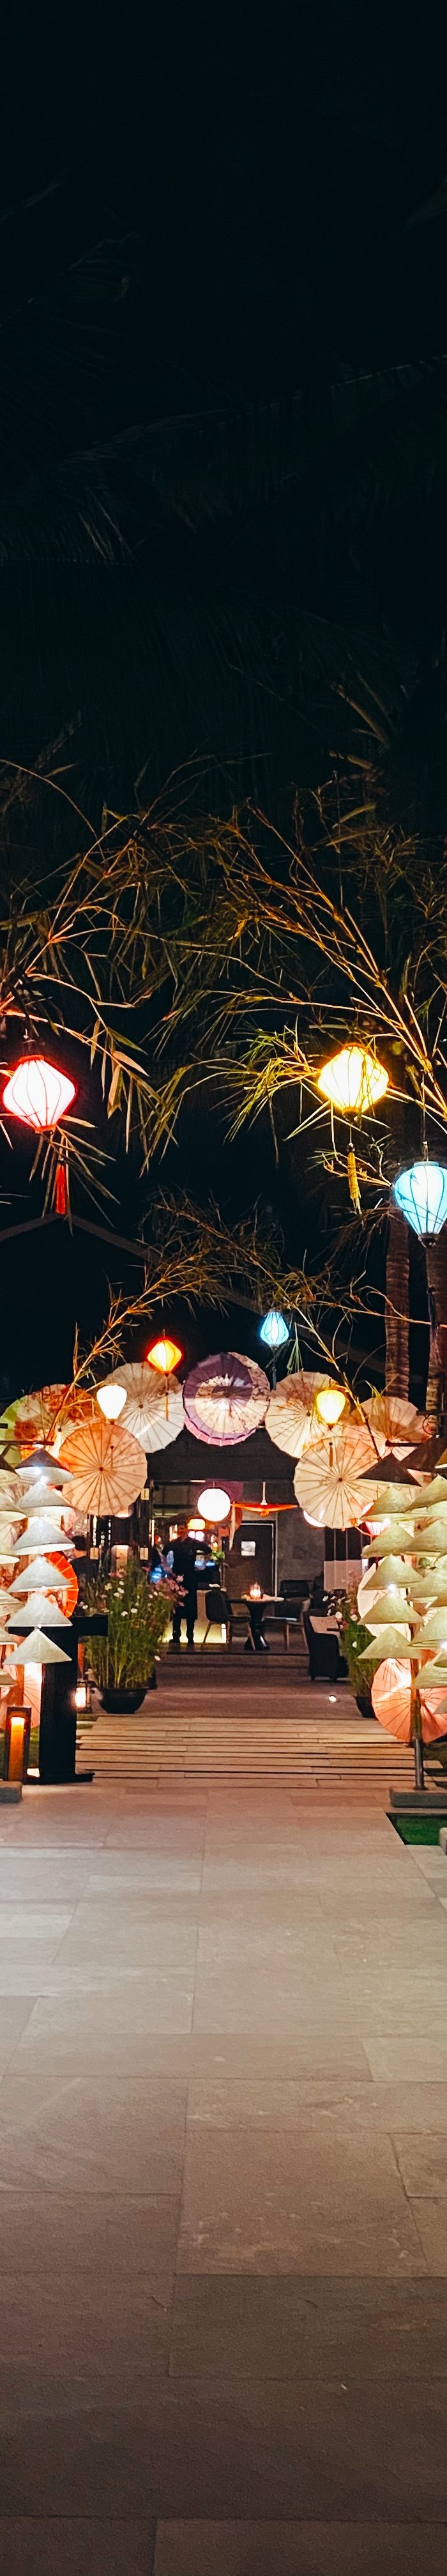 Alyssa Campanella of The A List blog shares Lunar New Year Celebrations at Four Seasons The Nam Hai in Hoi An, Vietnam